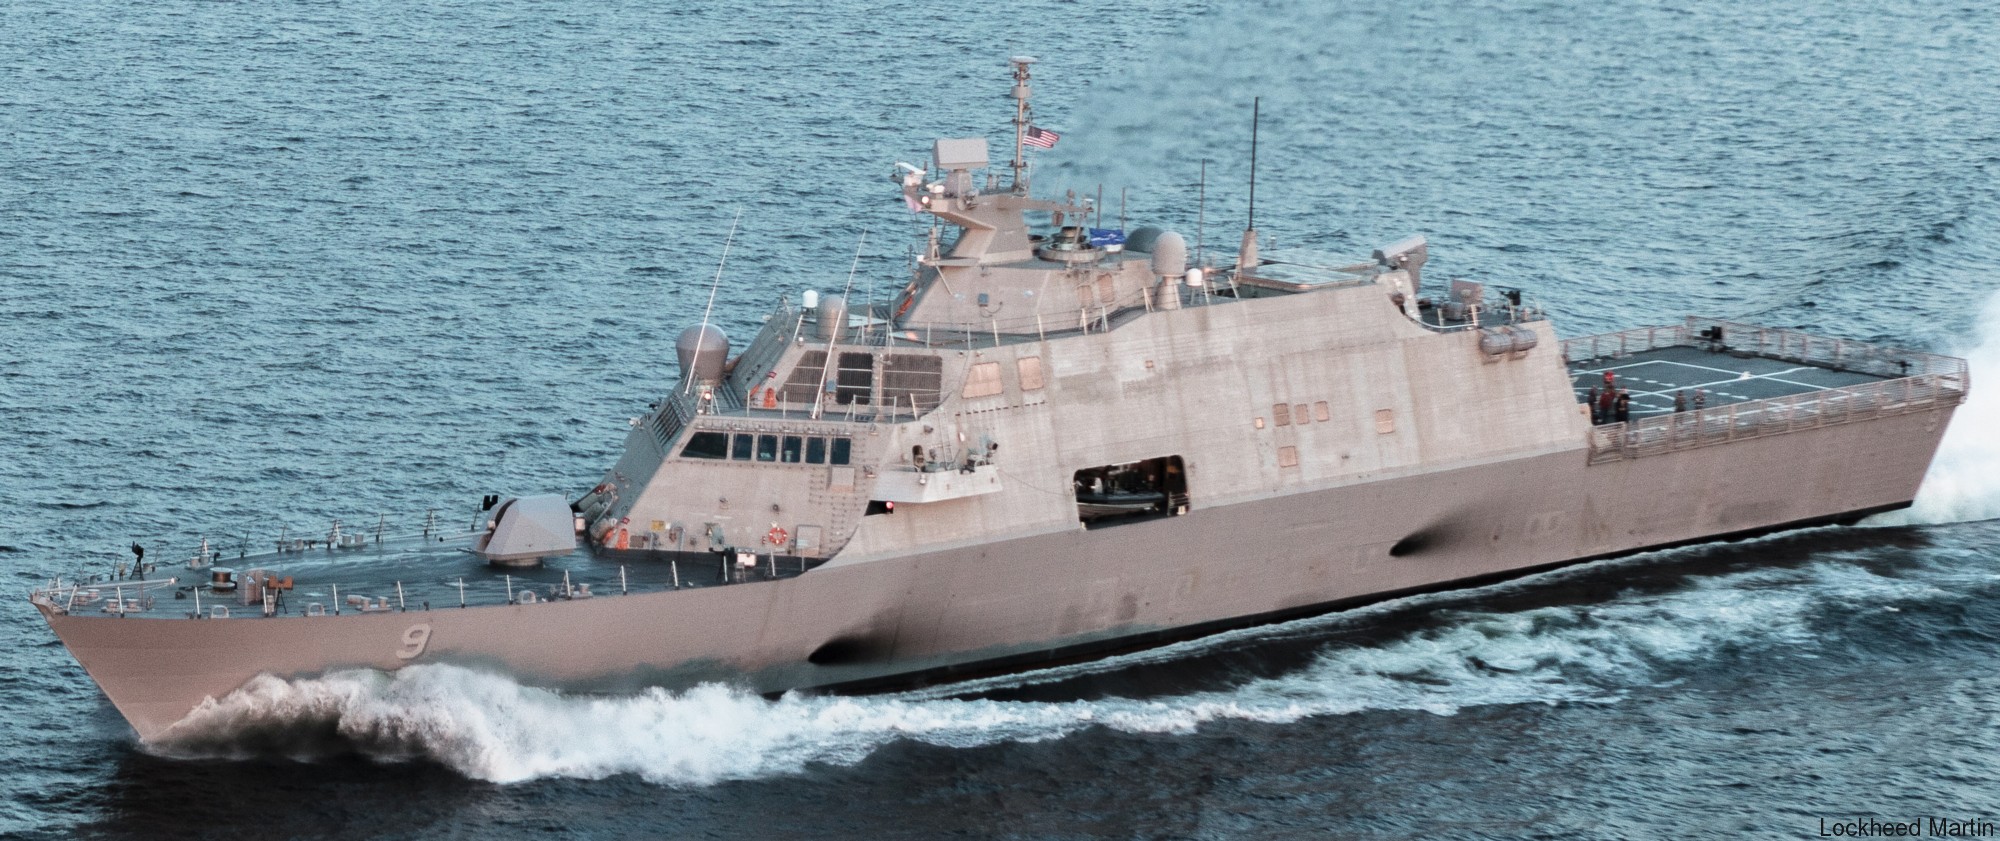 lcs-9 uss little rock freedom class littoral combat ship us navy 12